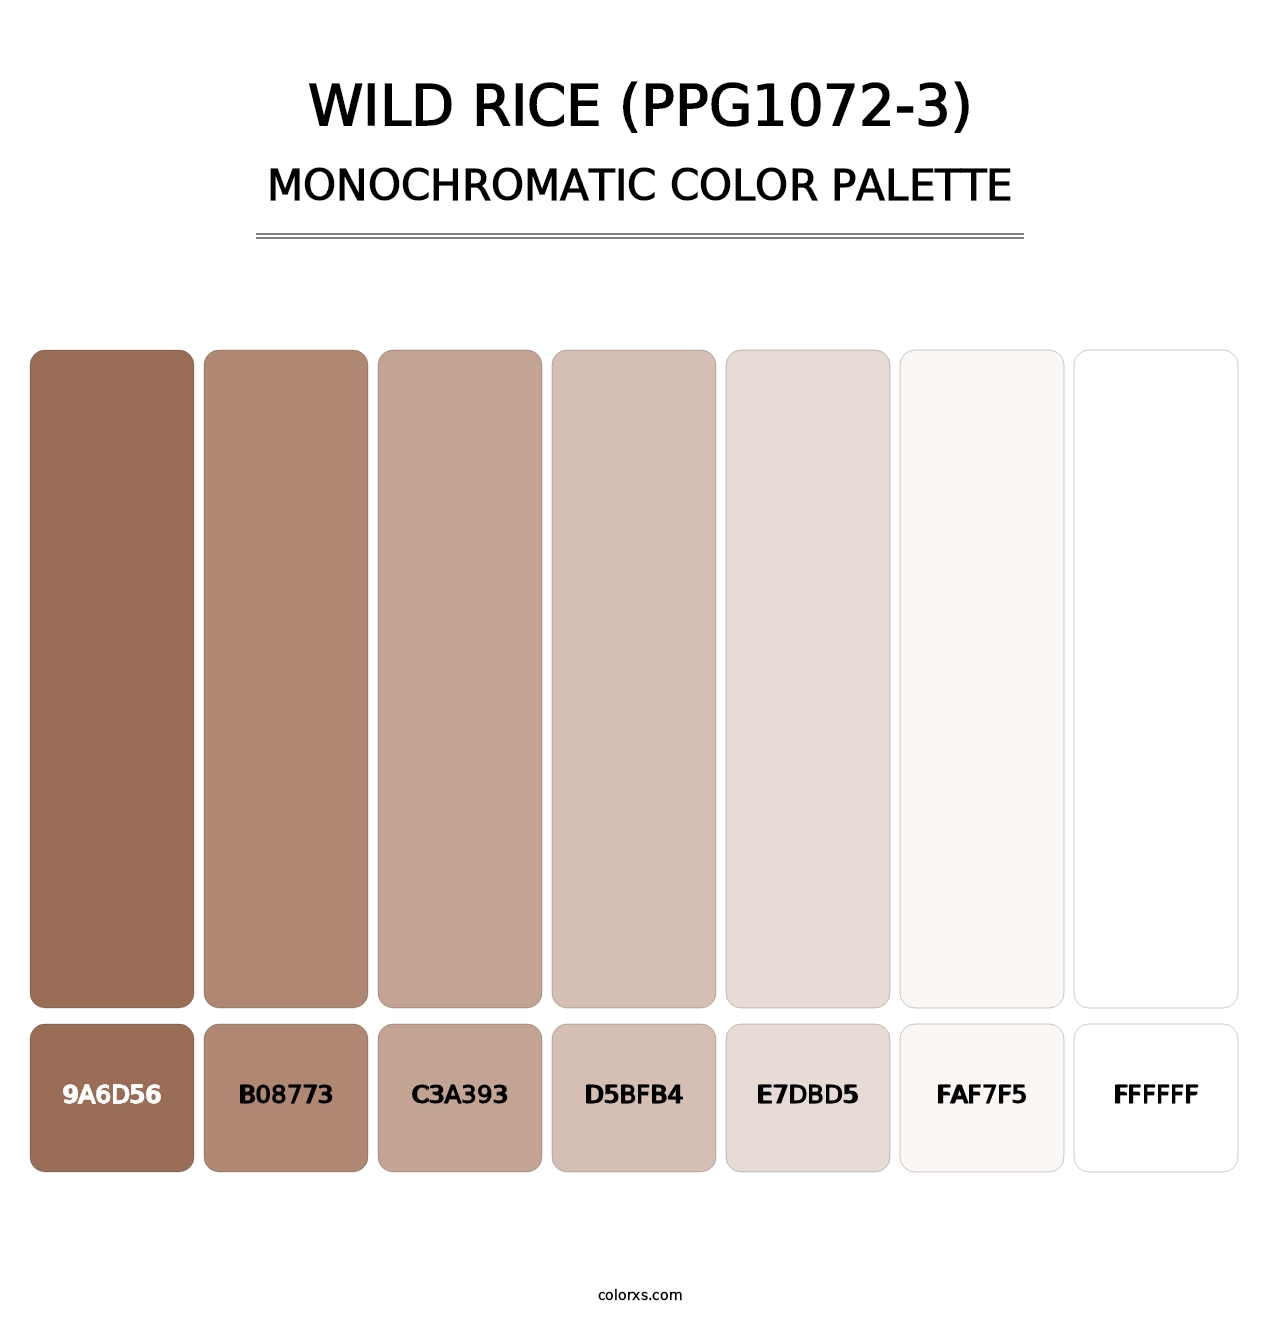 Wild Rice (PPG1072-3) - Monochromatic Color Palette